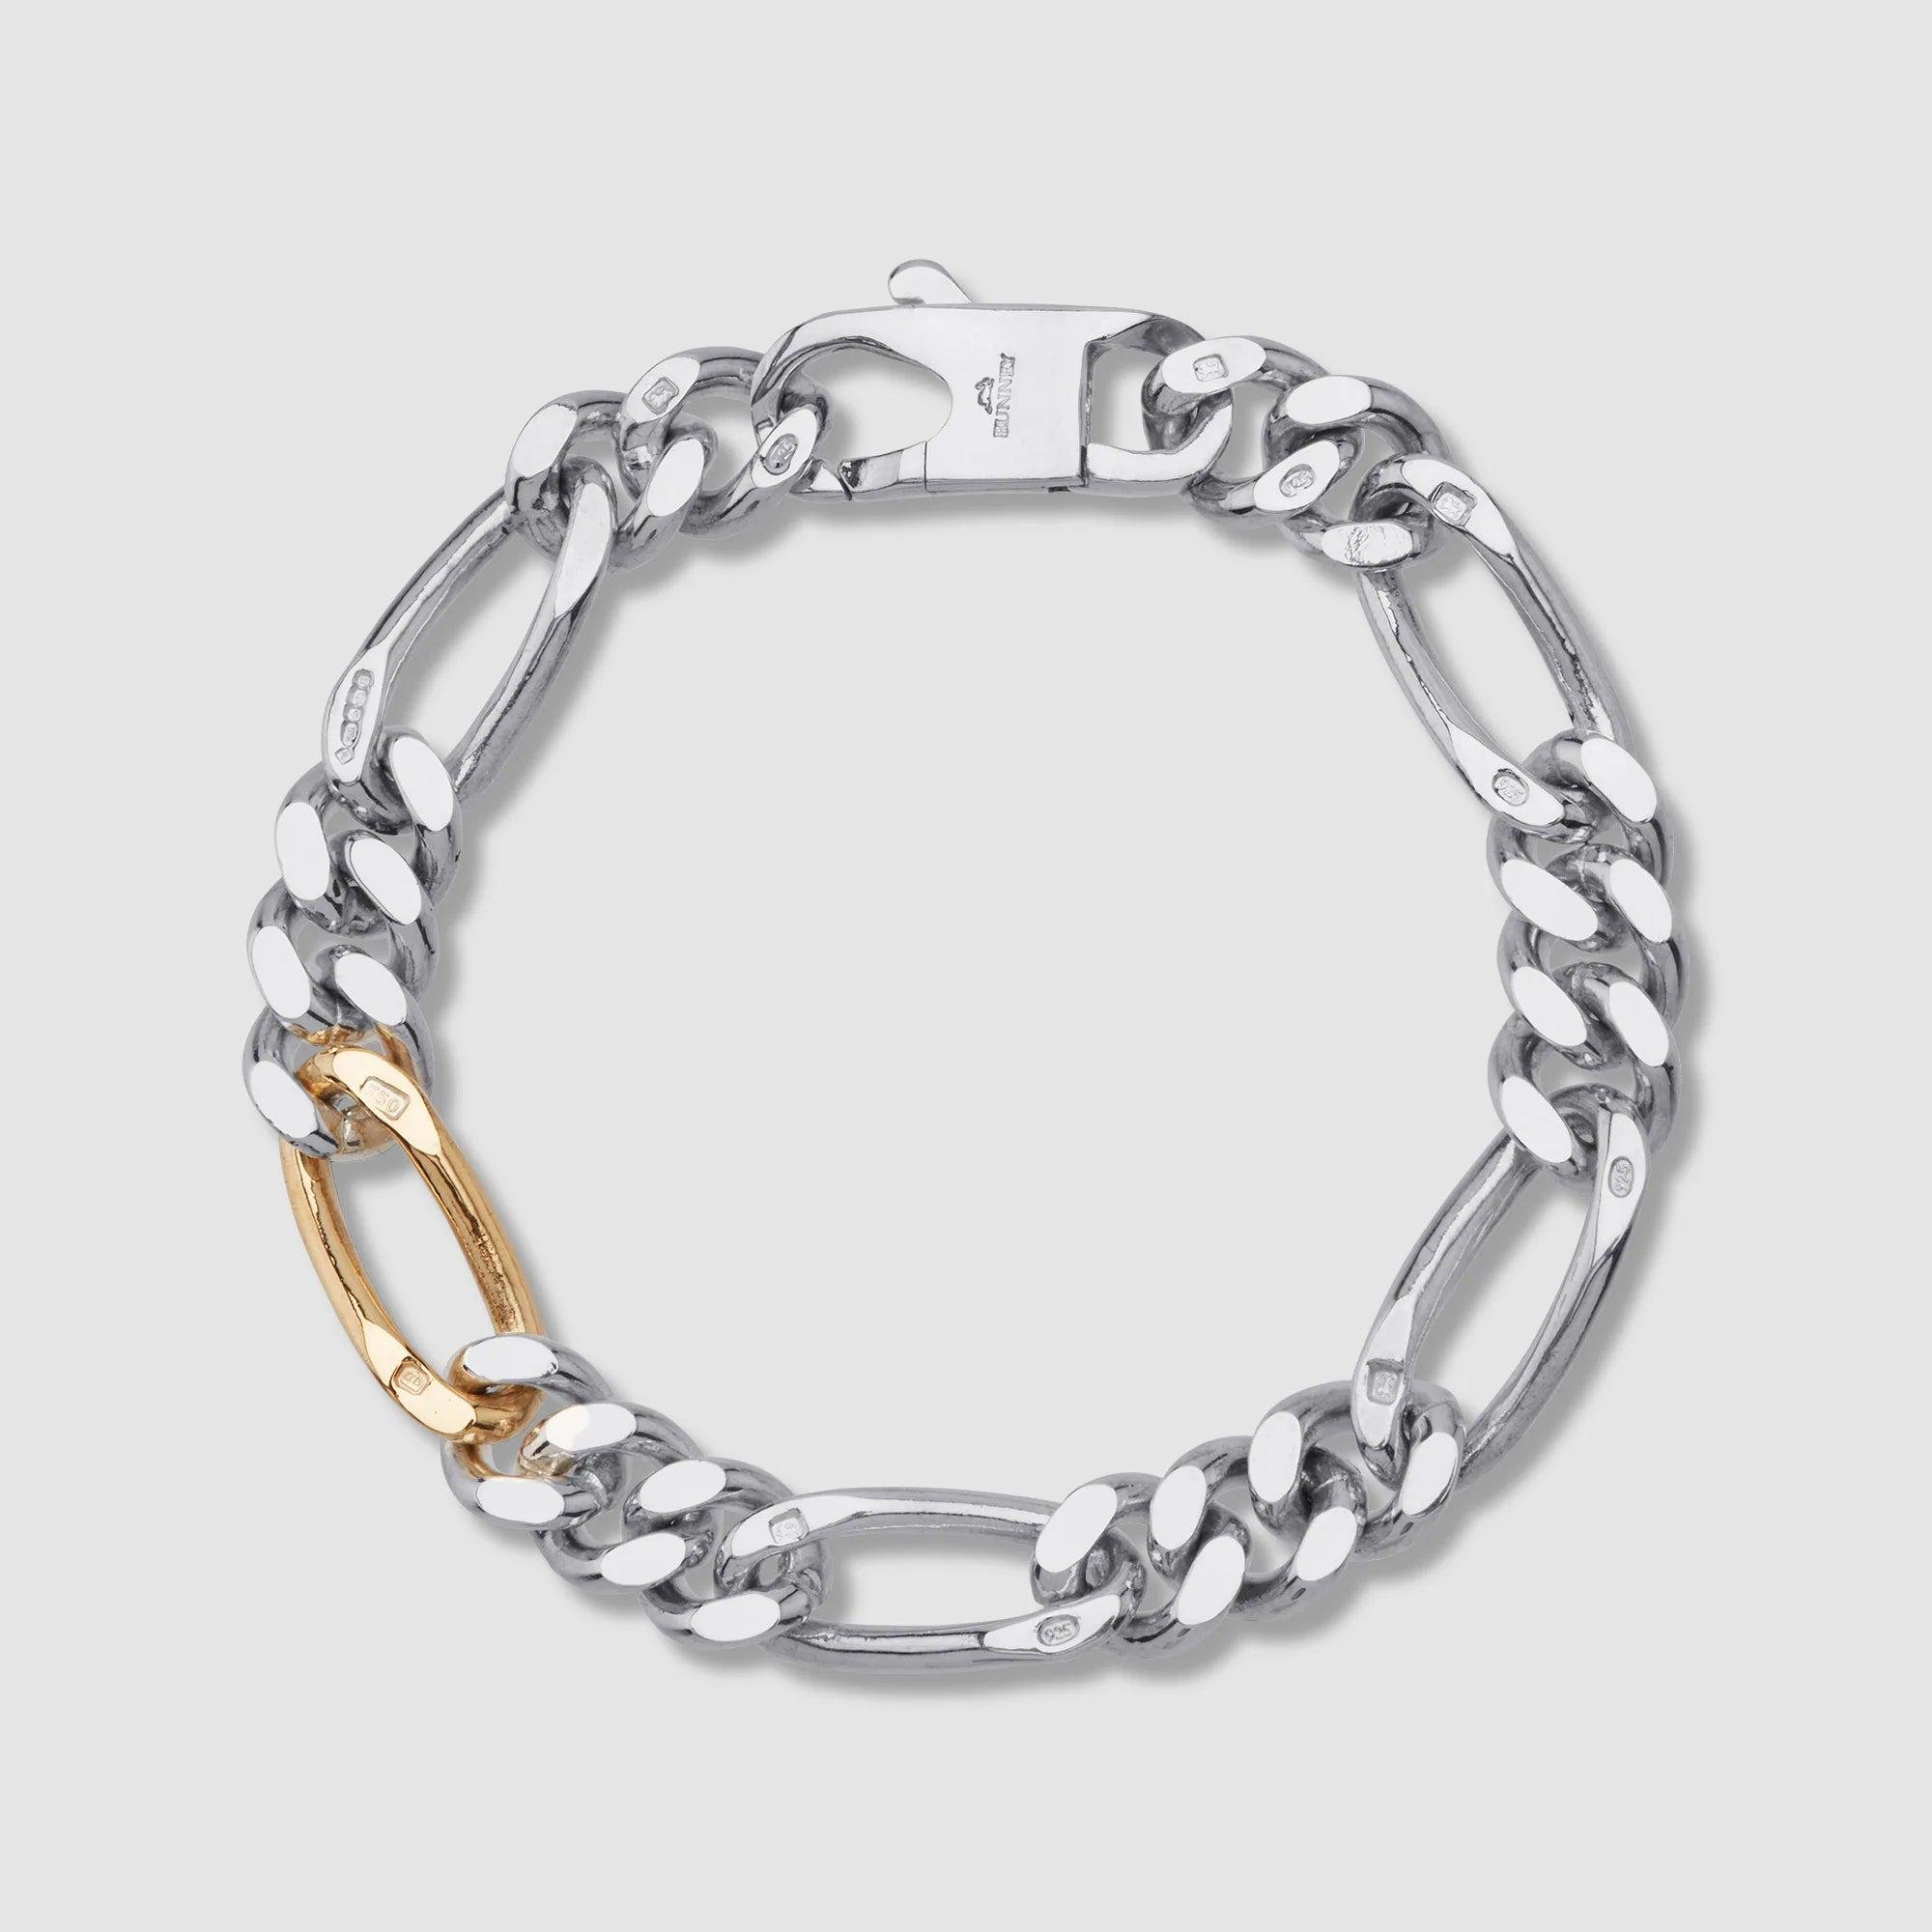 BUNNEY - Silver Figaro Bracelet with Gold Link by BUNNEY